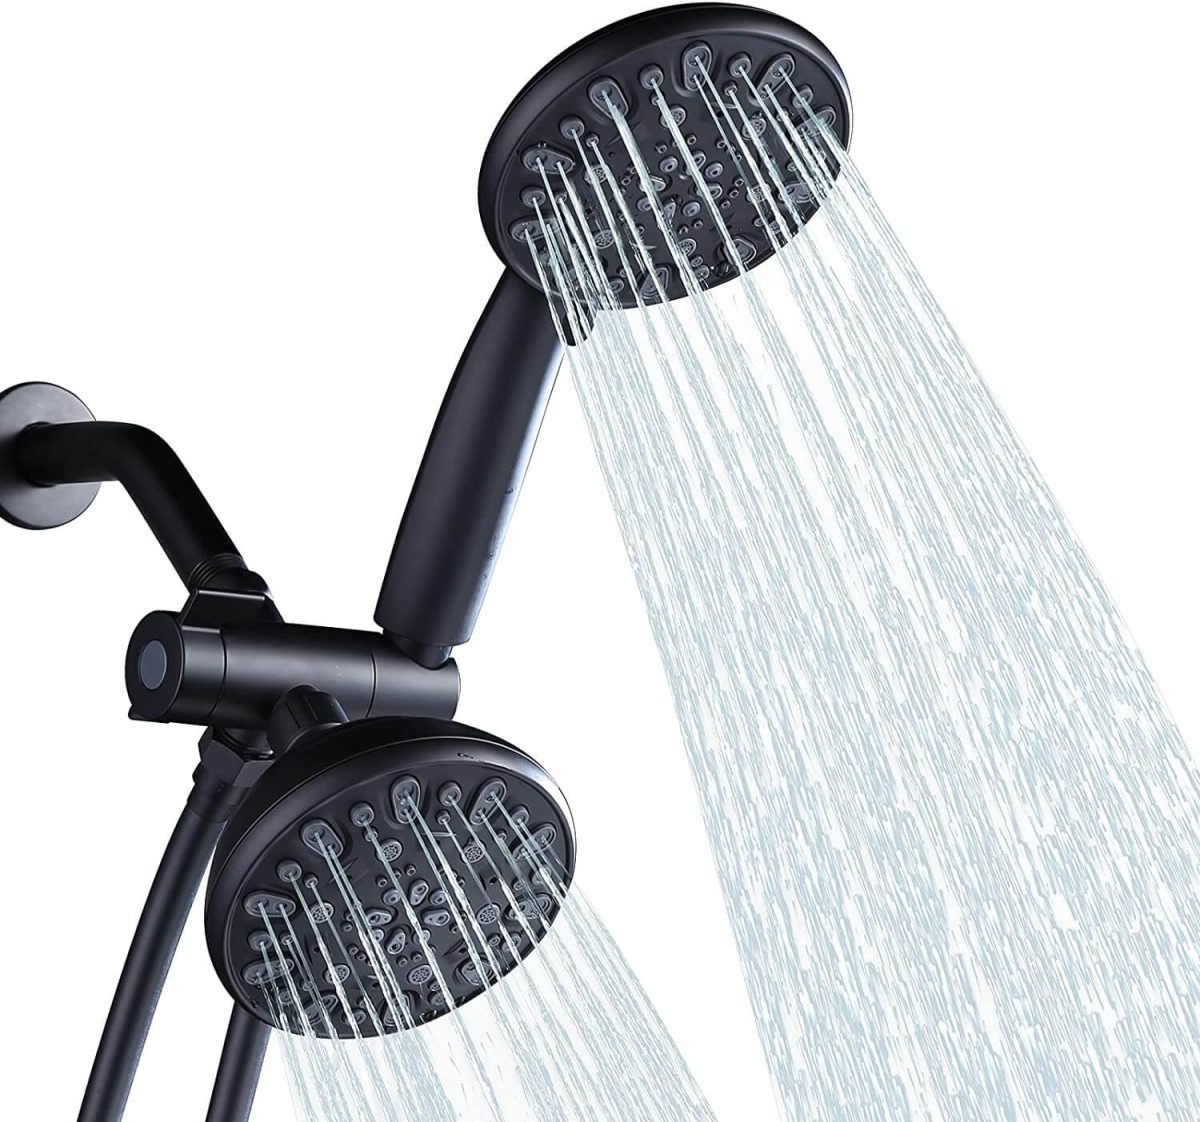 aleasha black 48 functions dual rain shower head